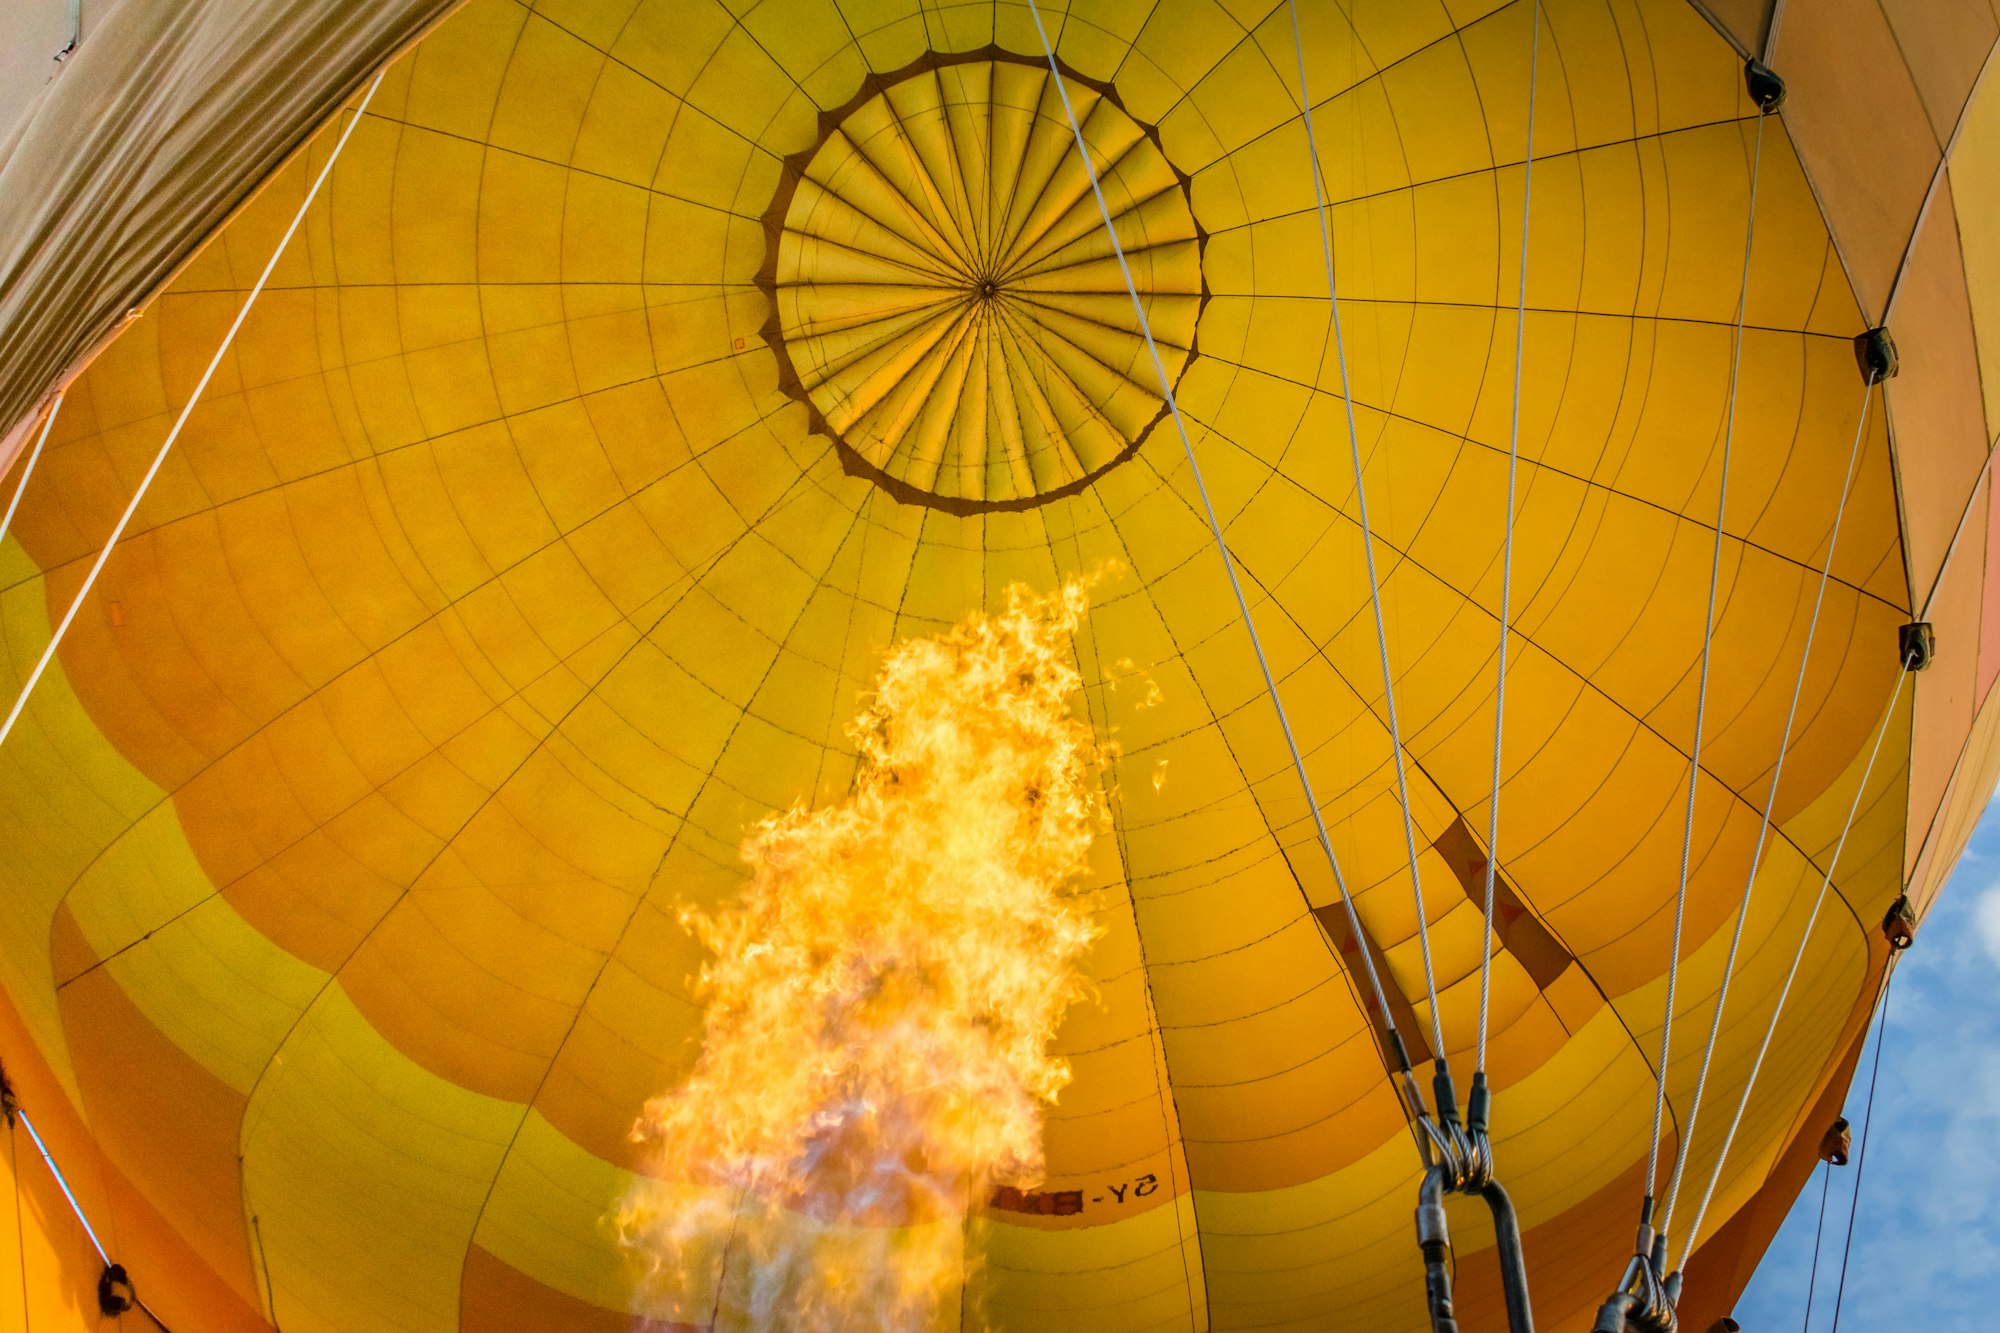 The main source of a hot air balloon lifting power